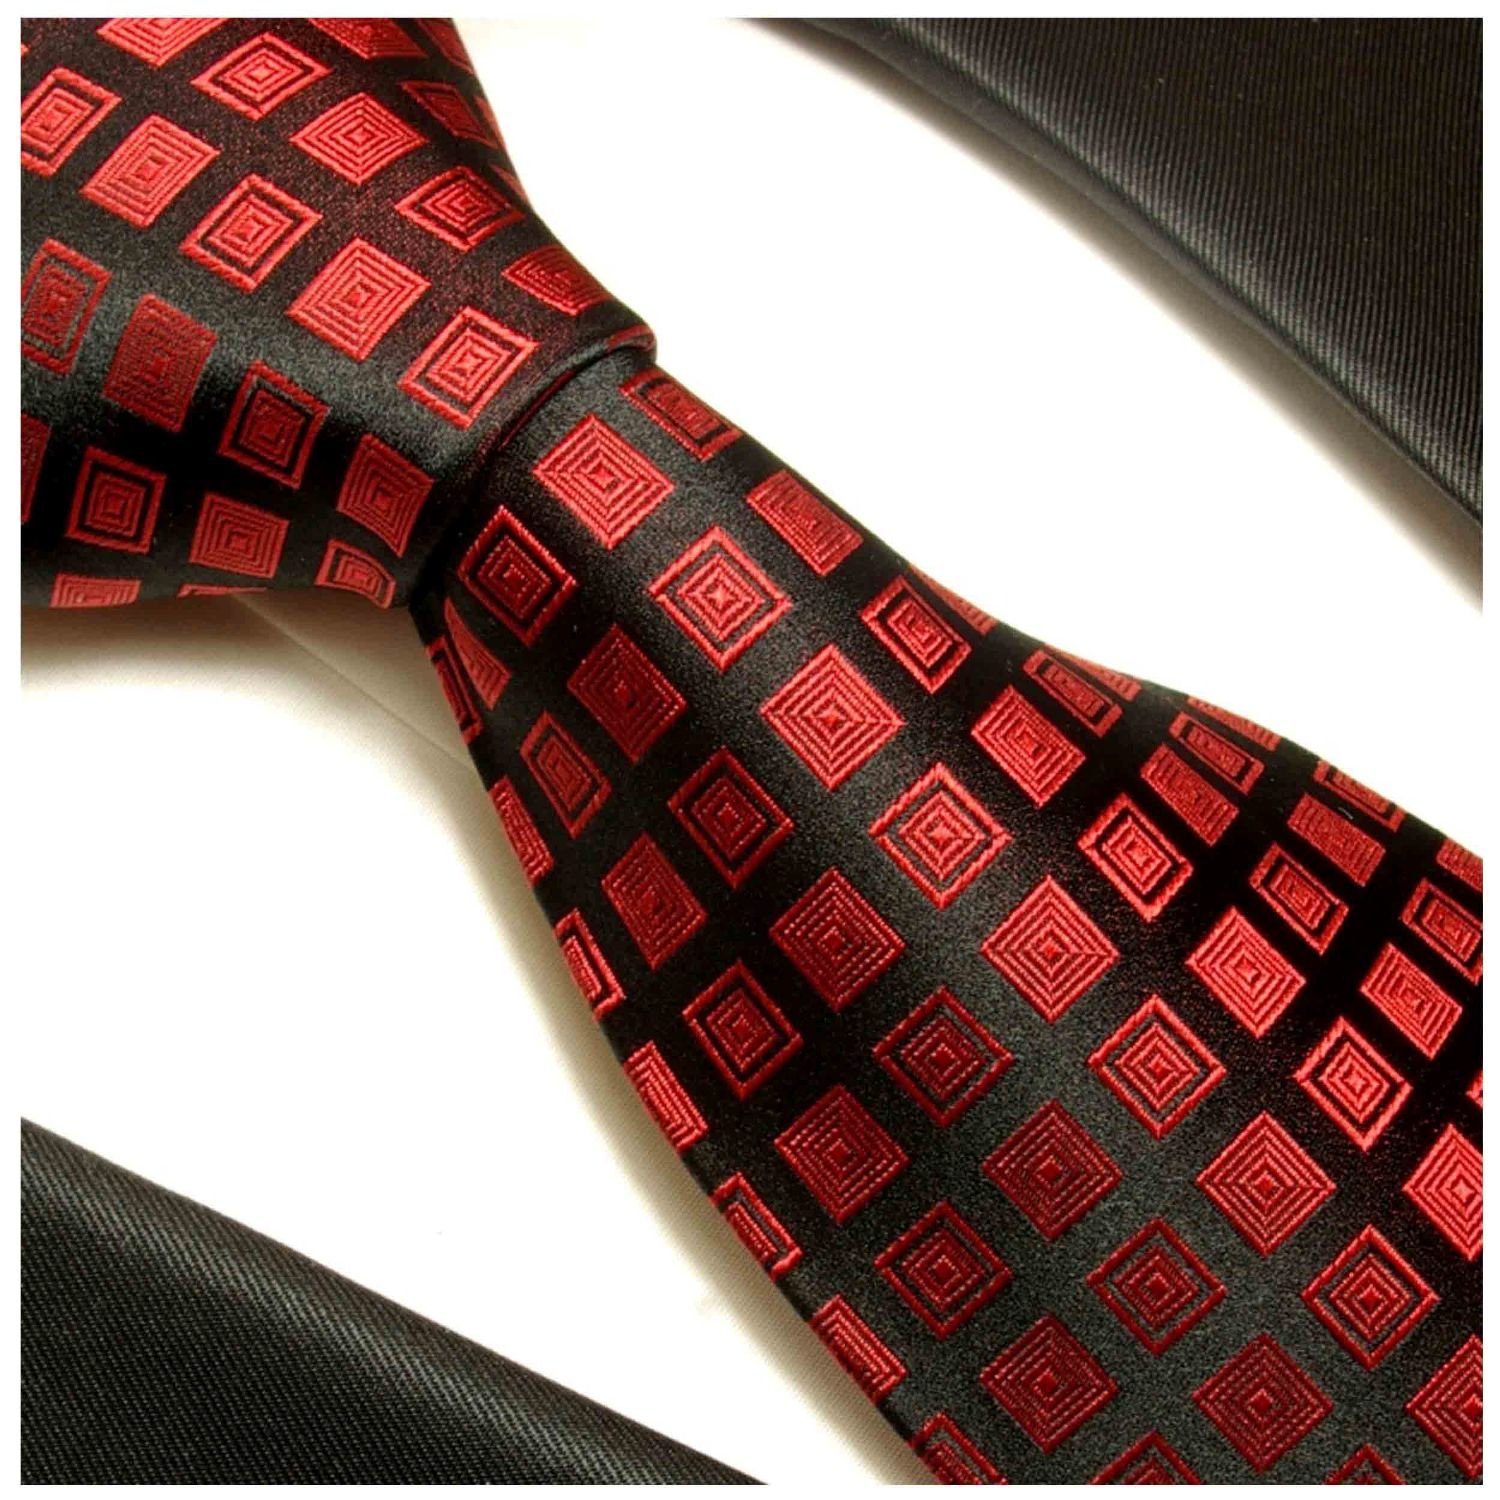 Paul Malone Krawatte Designer Seide kariert 764 Schlips schwarz 100% rot (8cm), Seidenkrawatte Breit Herren modern